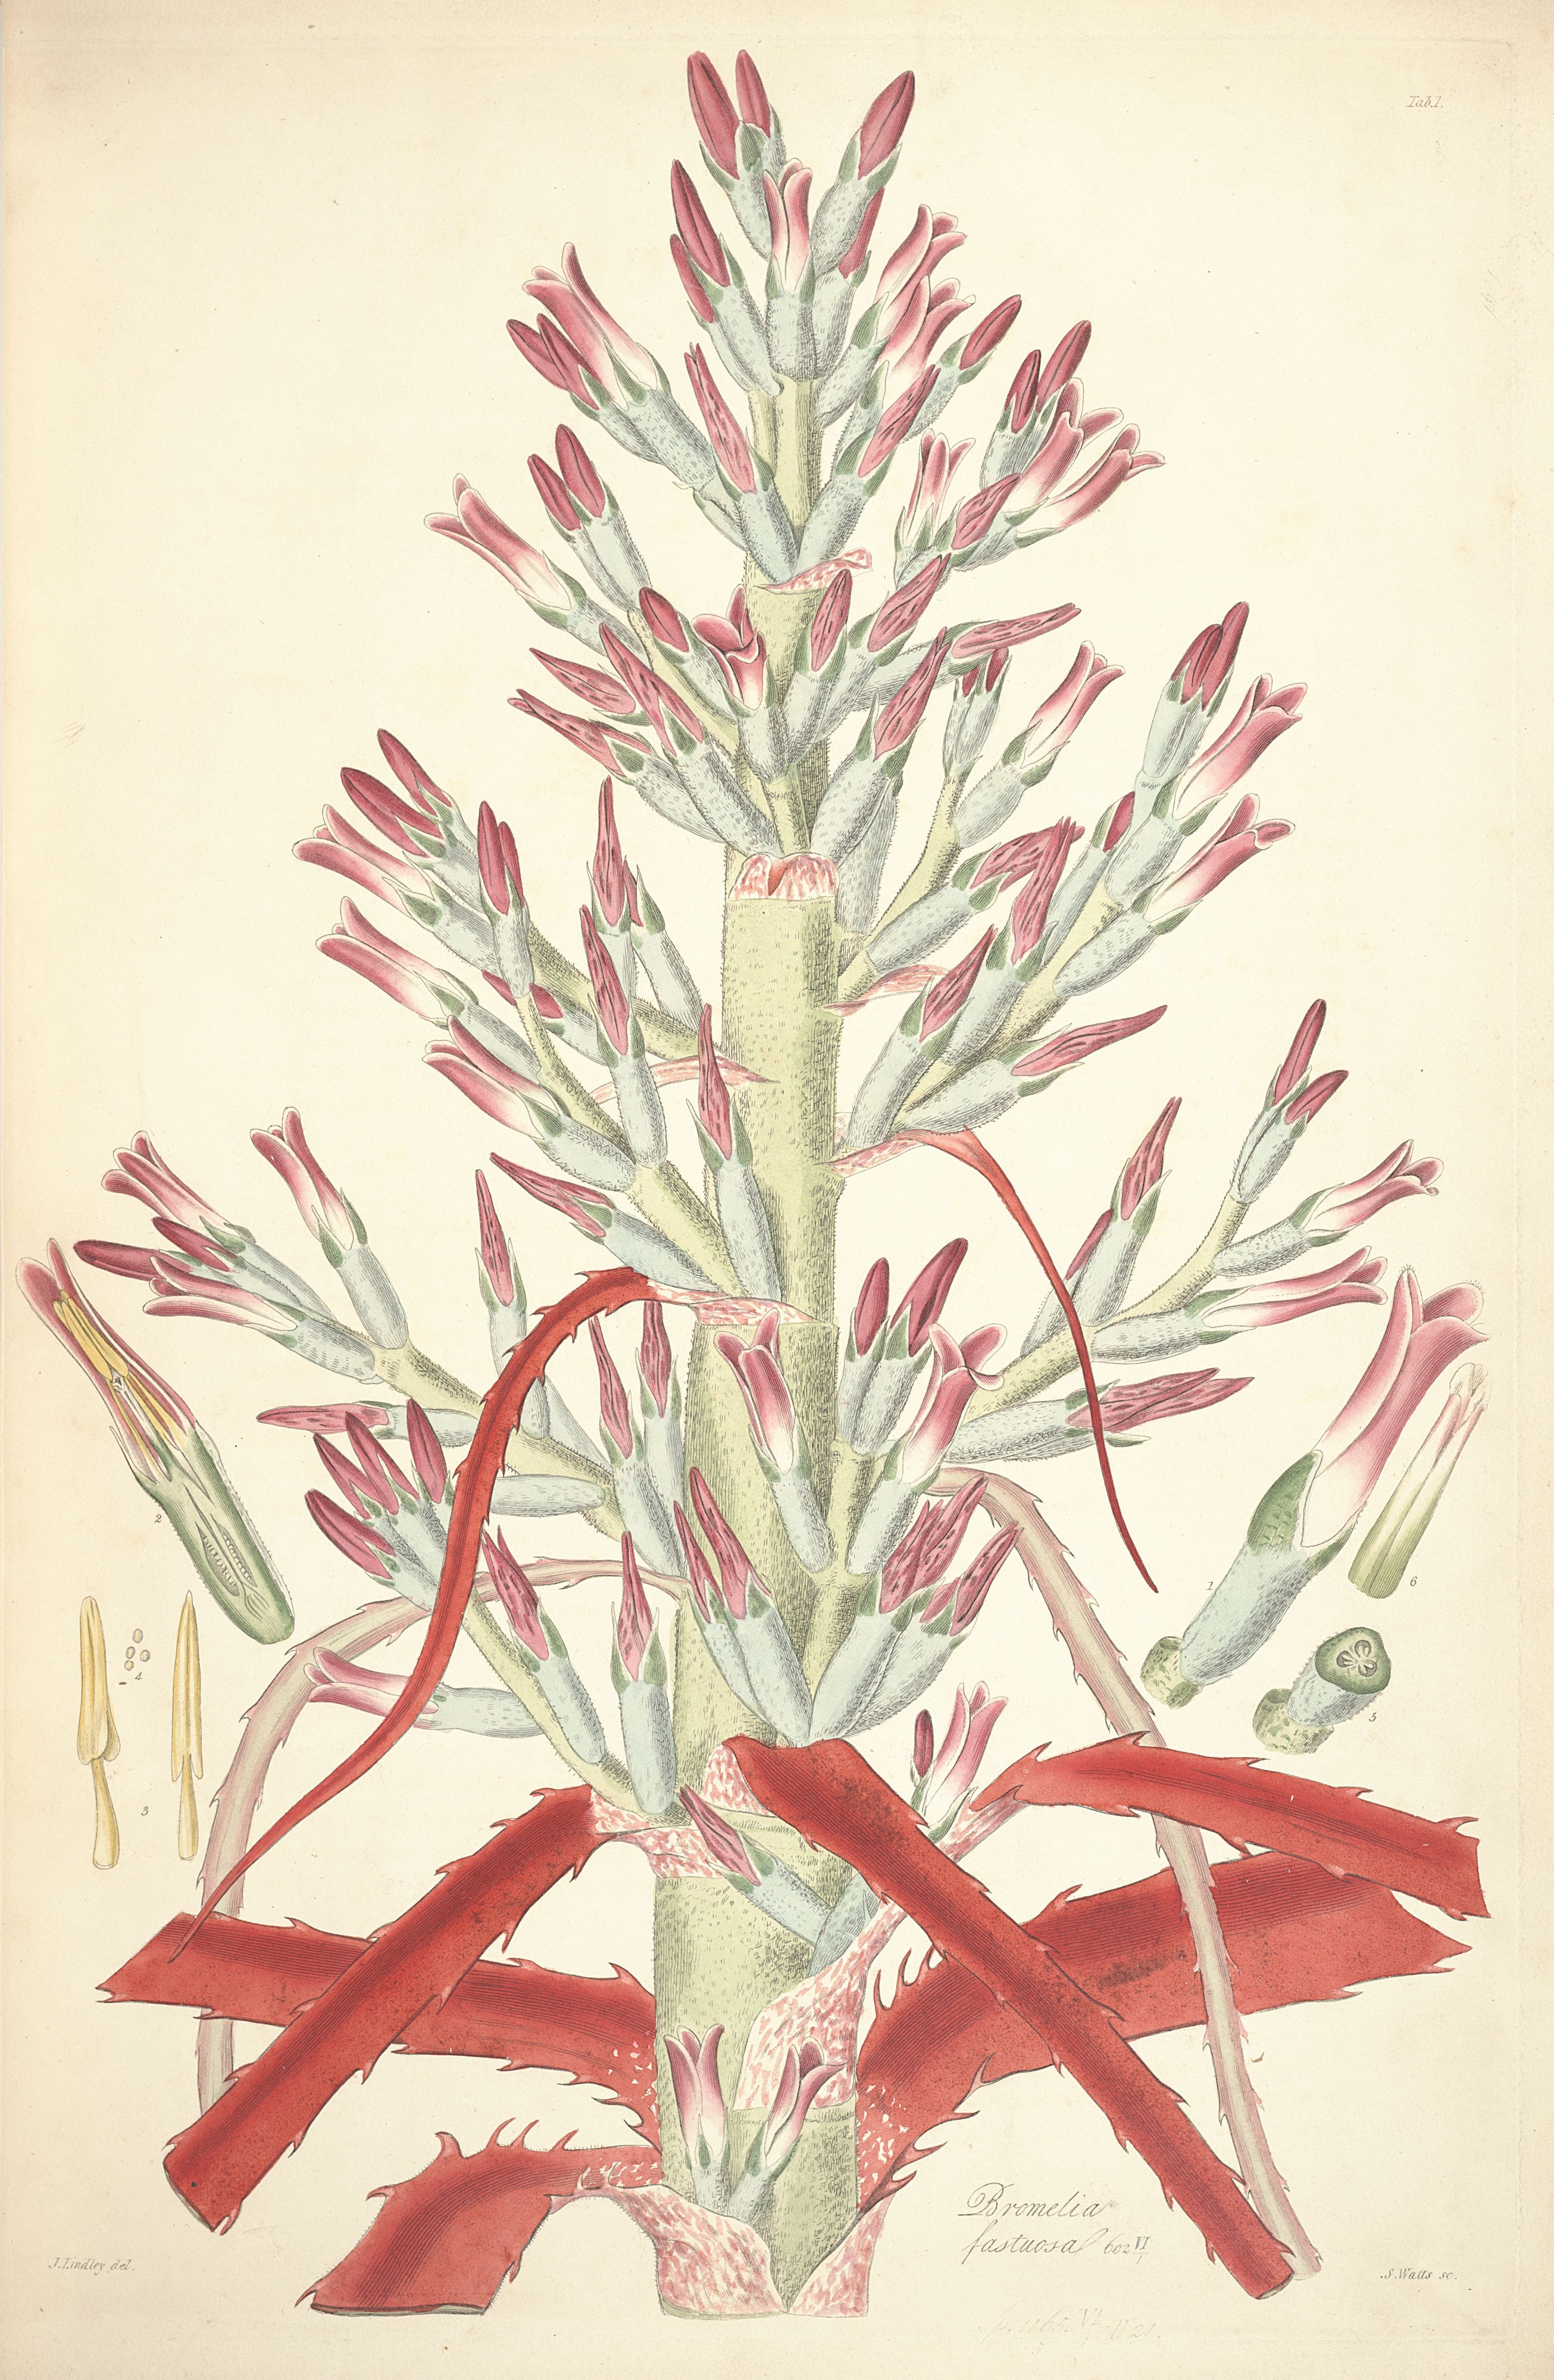 Bromelia pinguin (as Bromelia fastuosa) - Collectanea botanica - Lindley pl. 1 (1821)